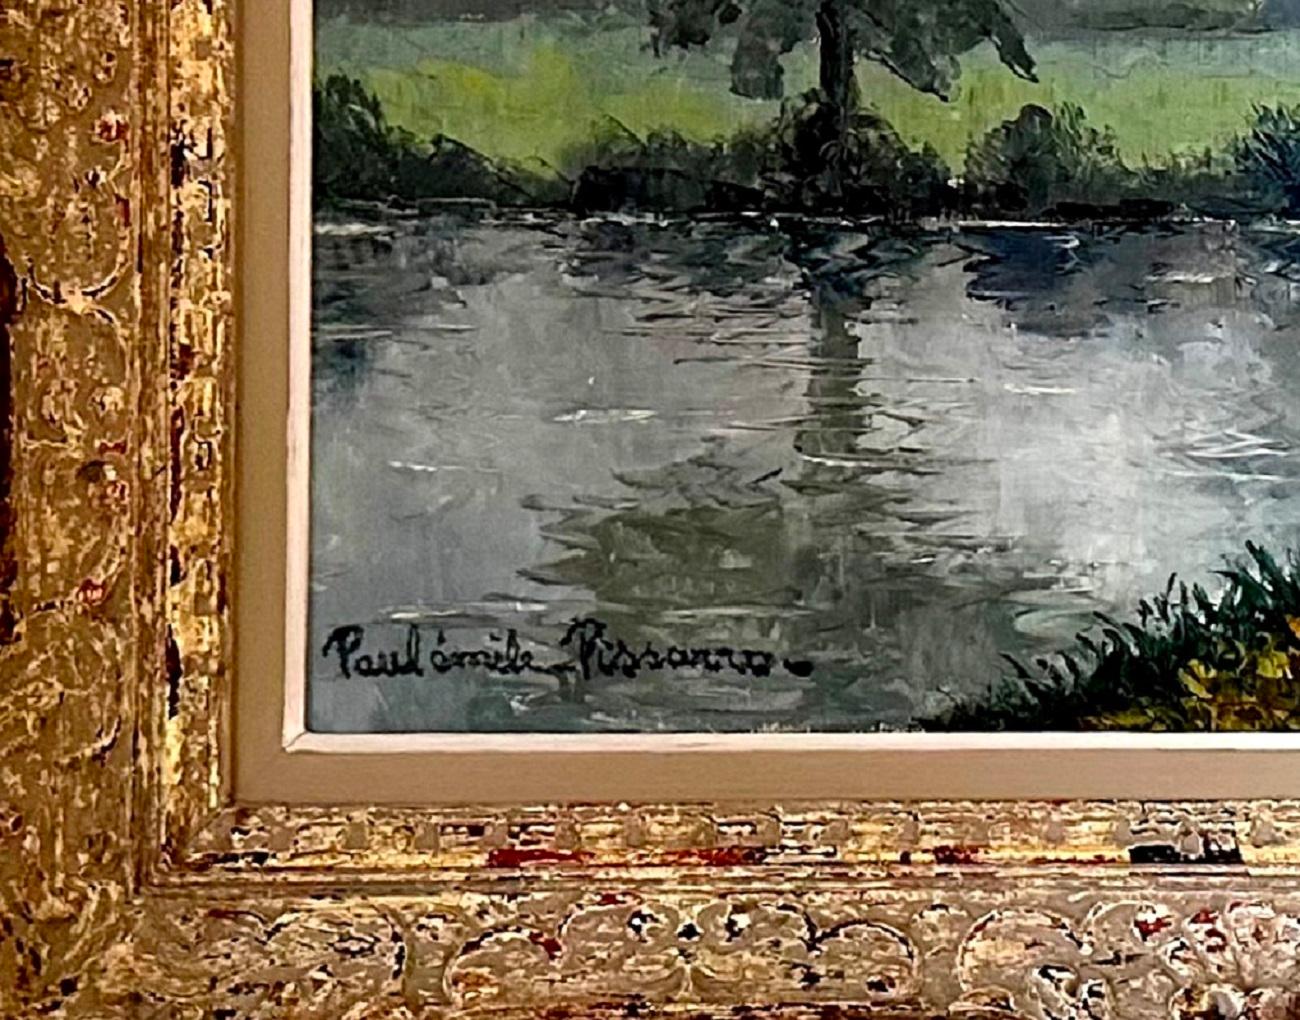  Novembre am Ufer des Wassers  (Braun), Landscape Painting, von Paul Emile Pissarro